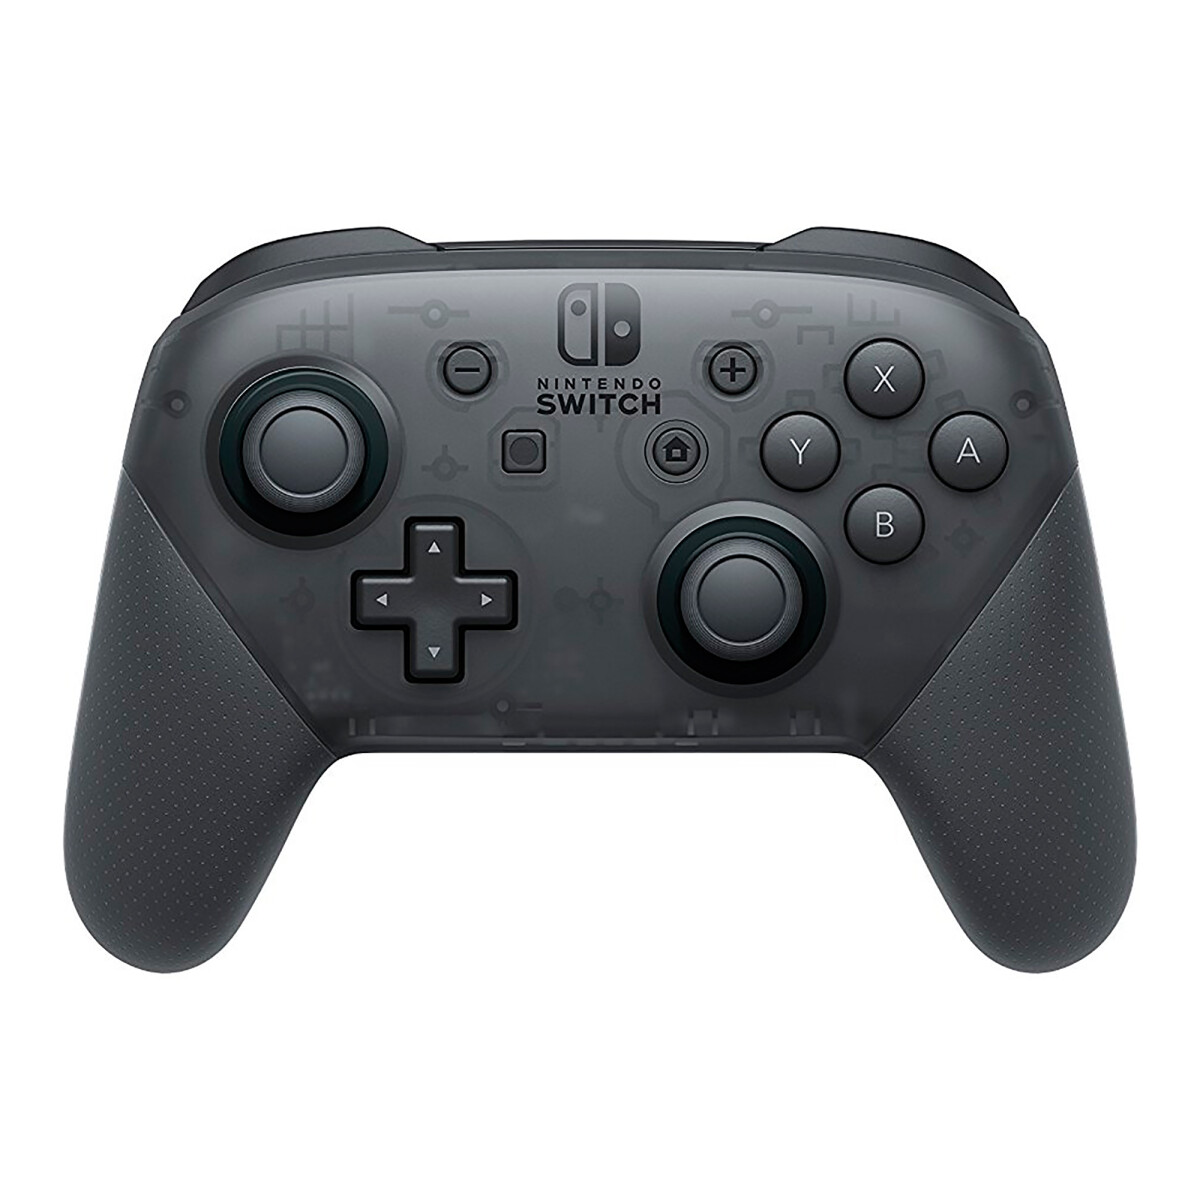 Nintendo - Gamepad Switch Pro - Controles de Movimiento. 2 Palancas de Control Analogico. Hd Rumble. - 001 